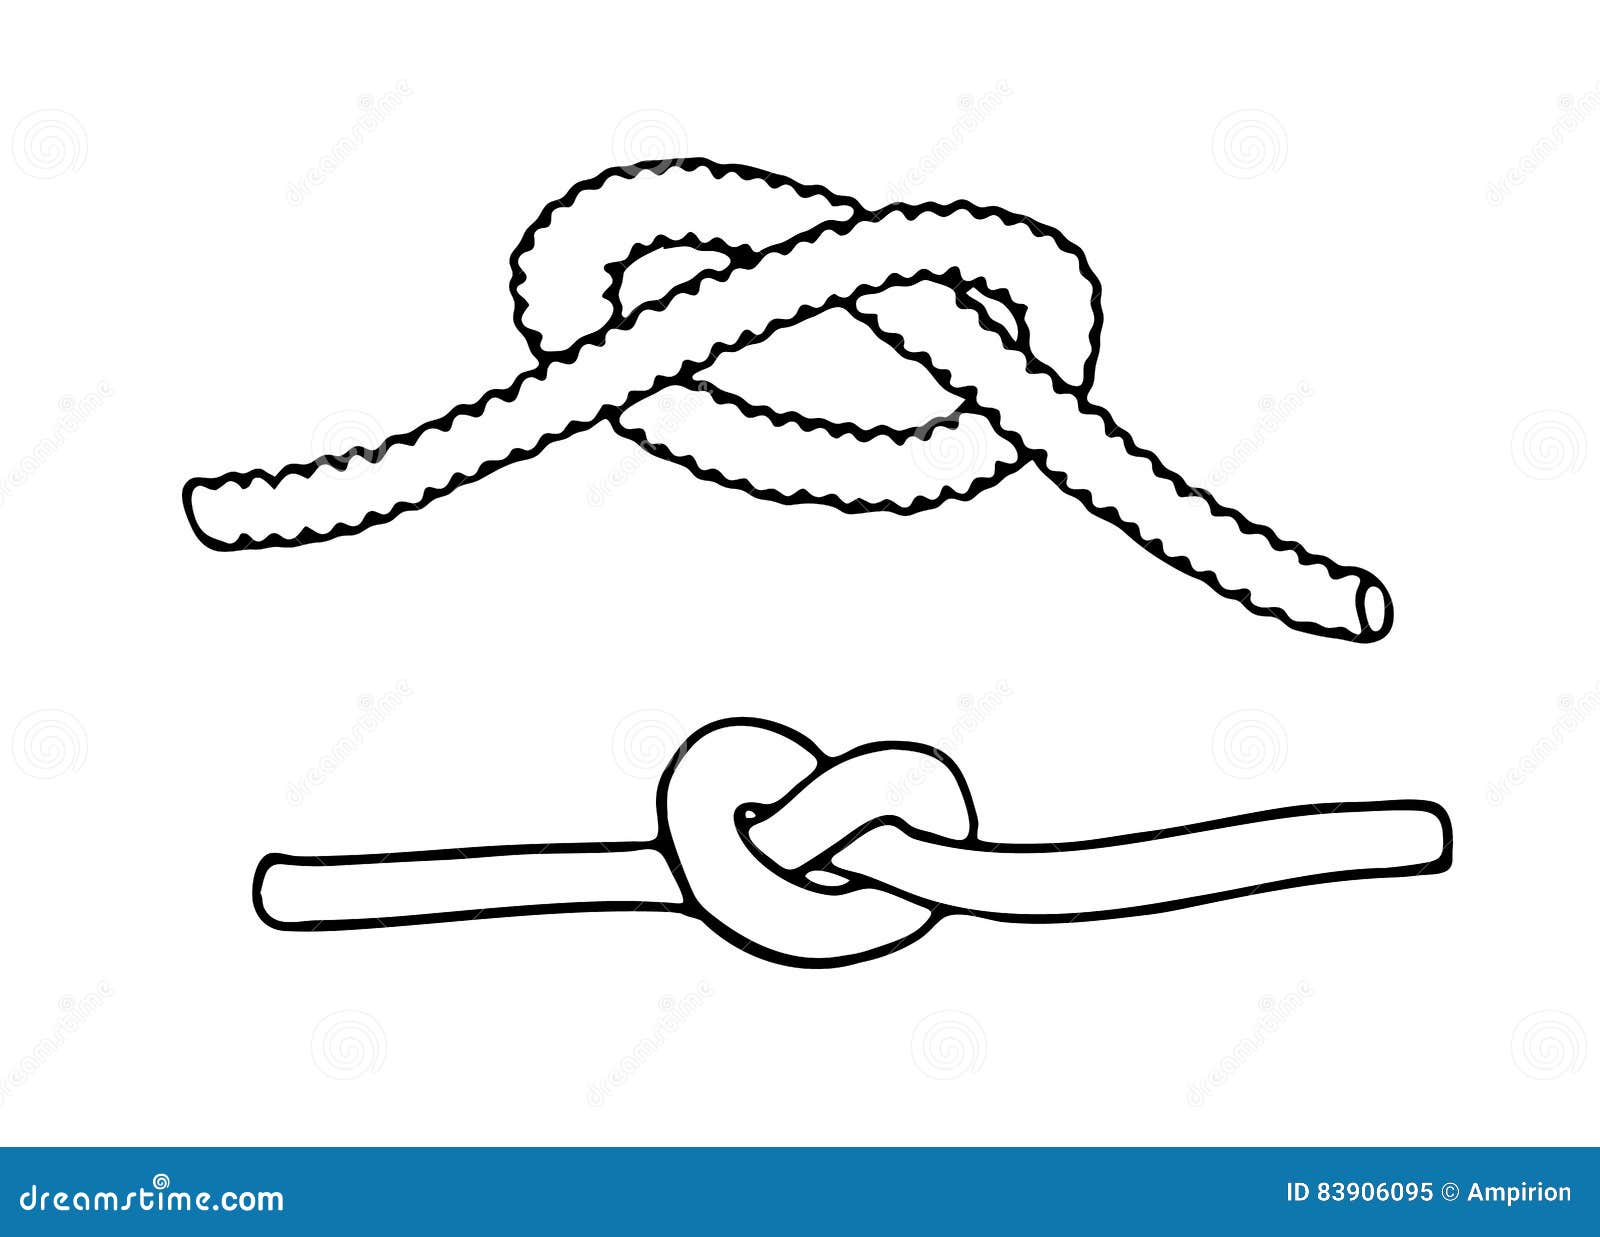 Premium Vector  Hand drawn square knot